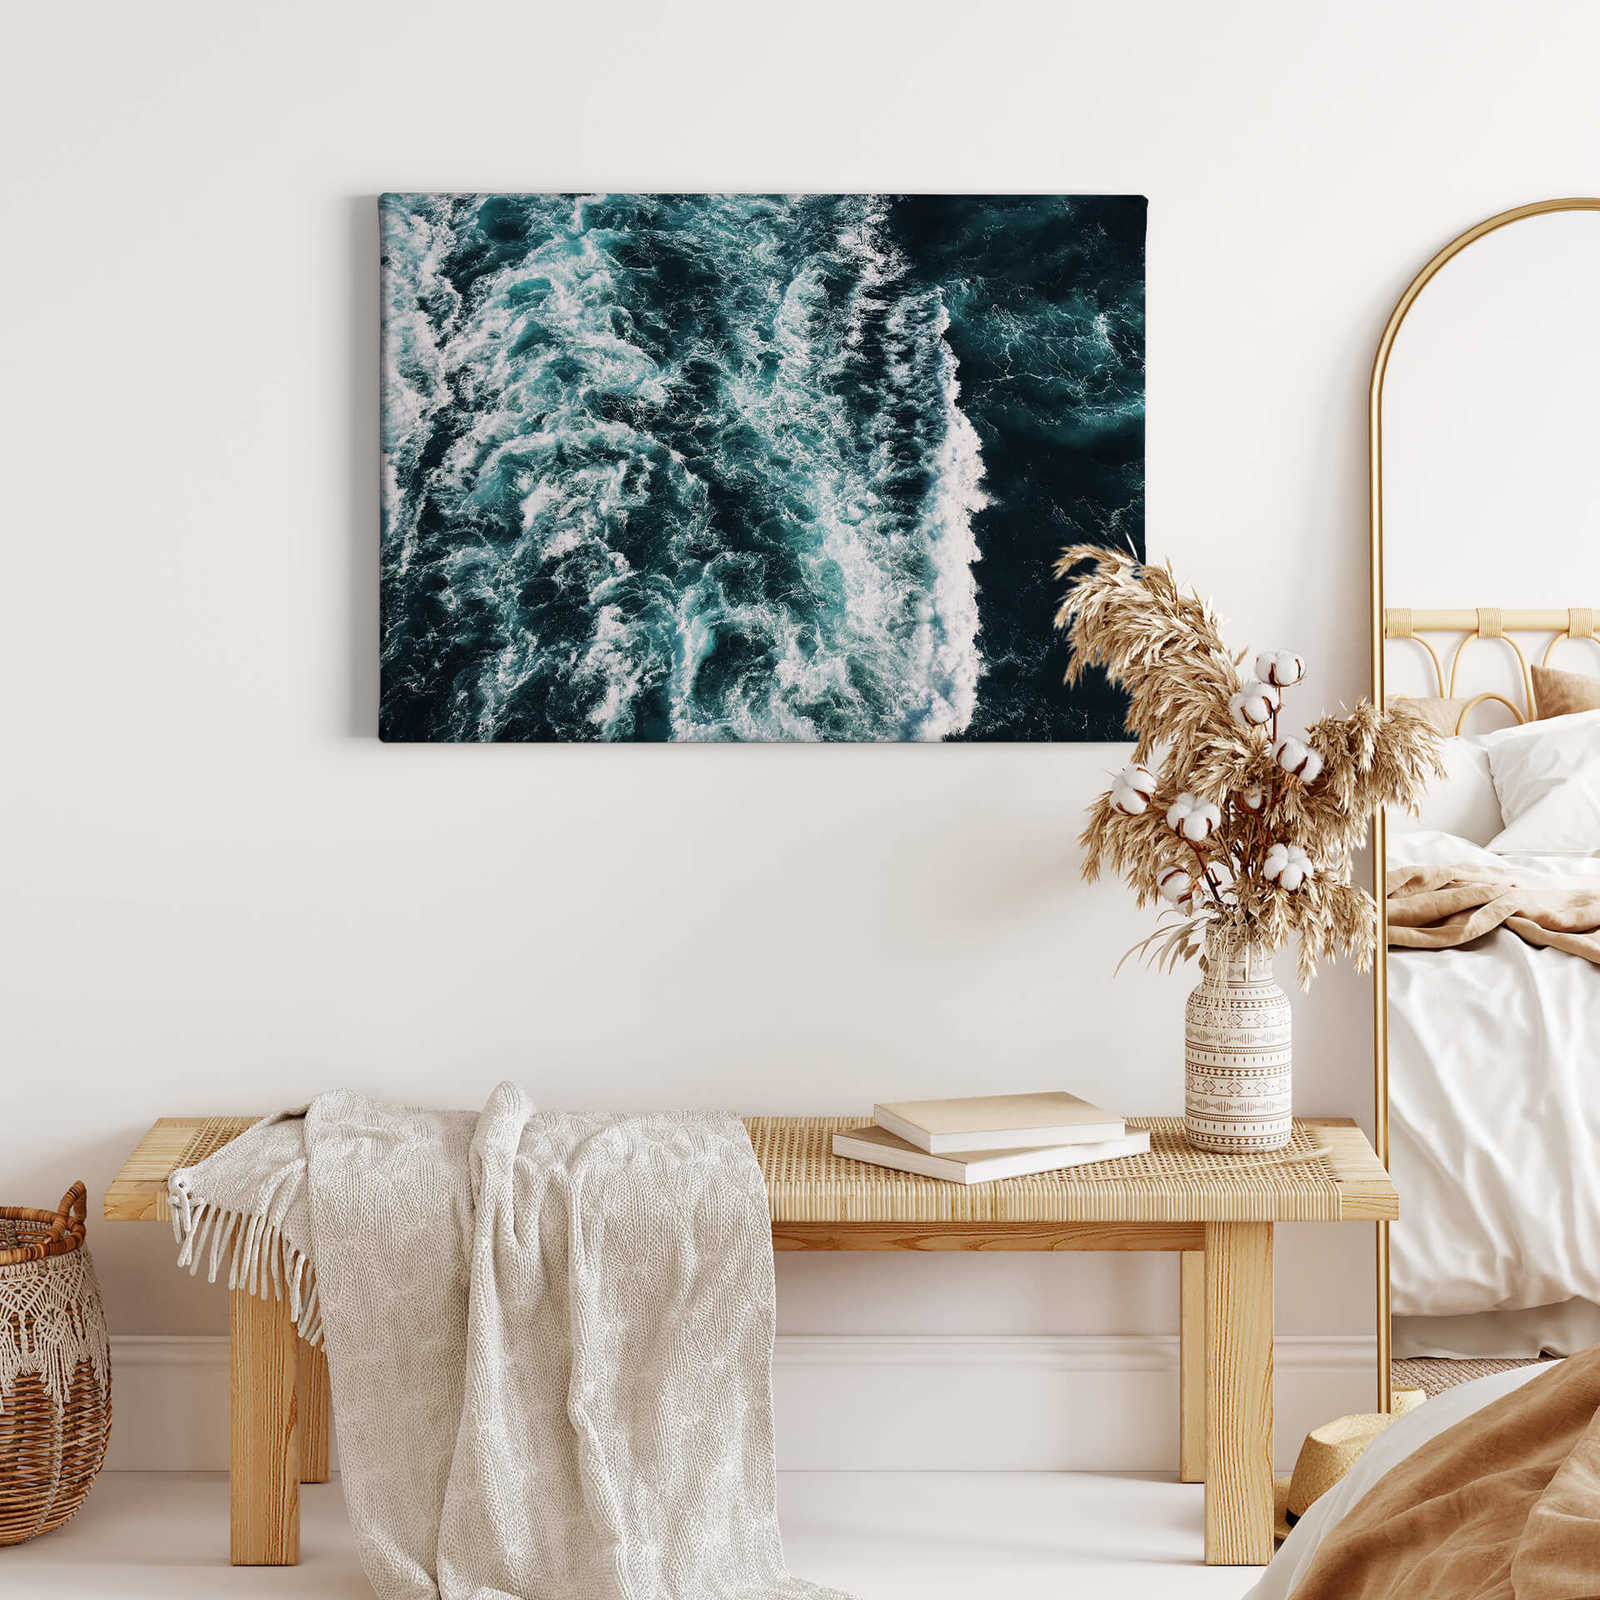             Blue sea canvas print with wave motif
        